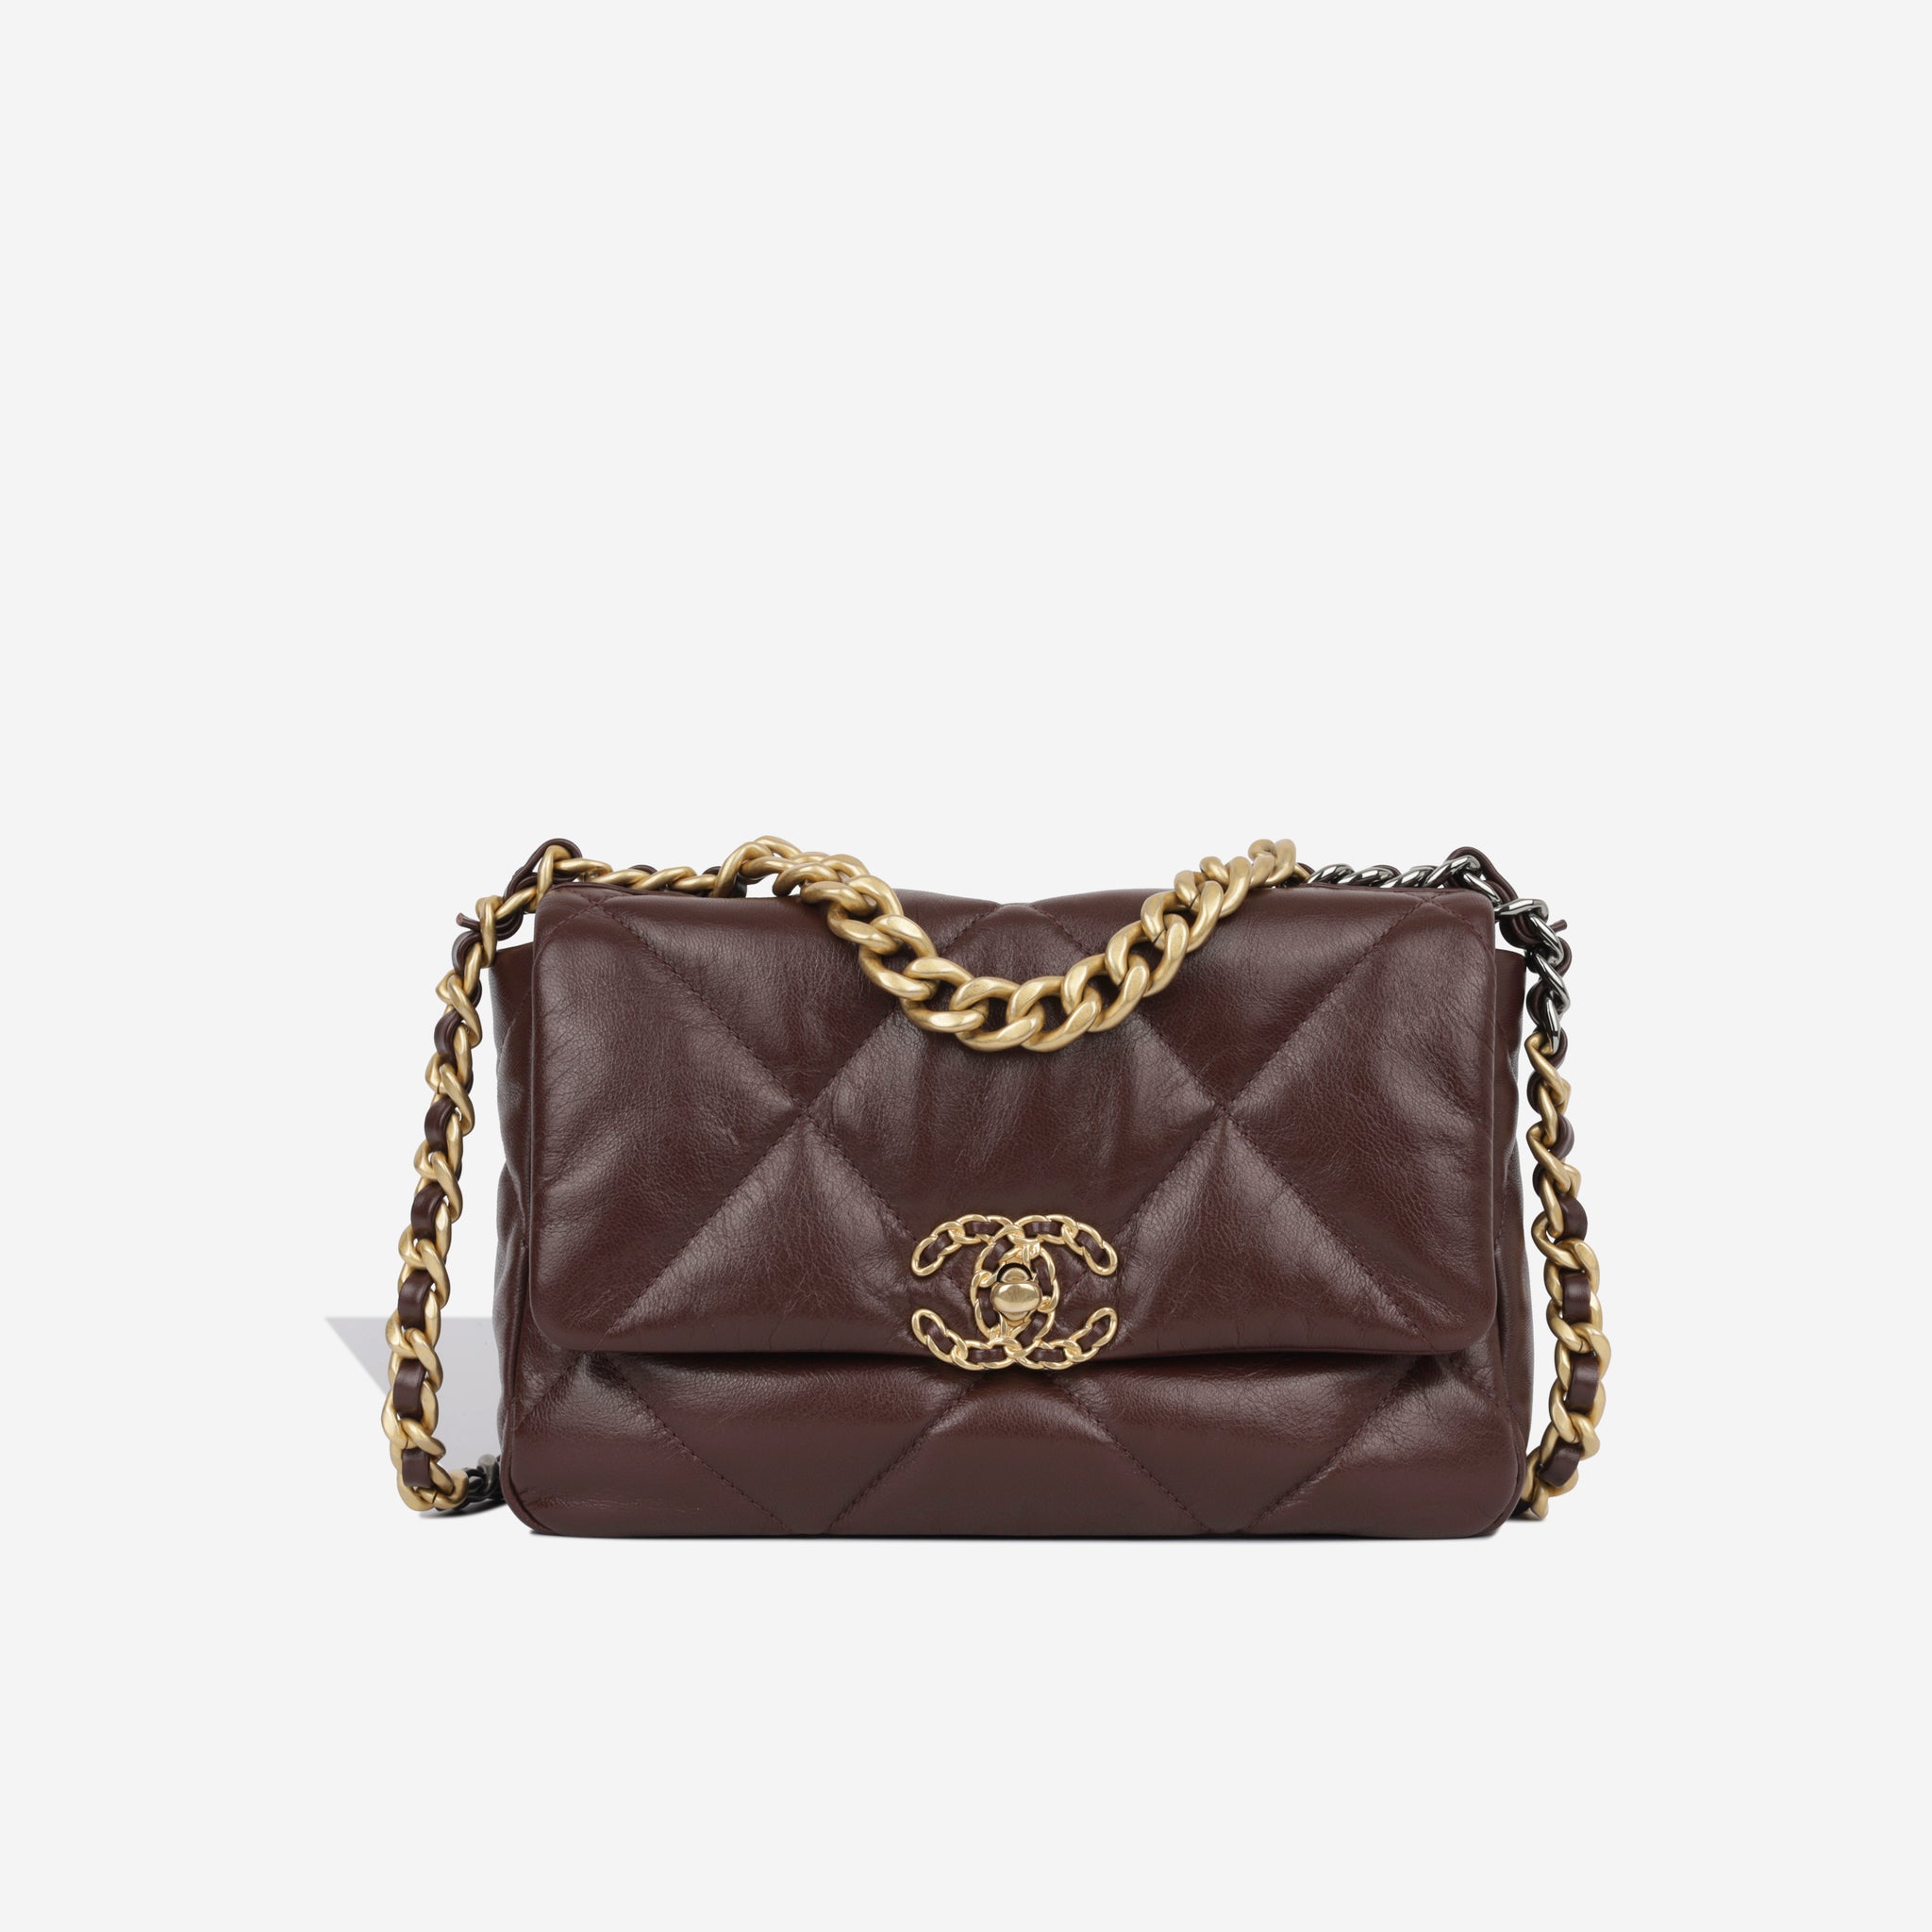 Chanel - Chanel 19 Flap Bag - Small - Oxblood Goatskin - Immaculate